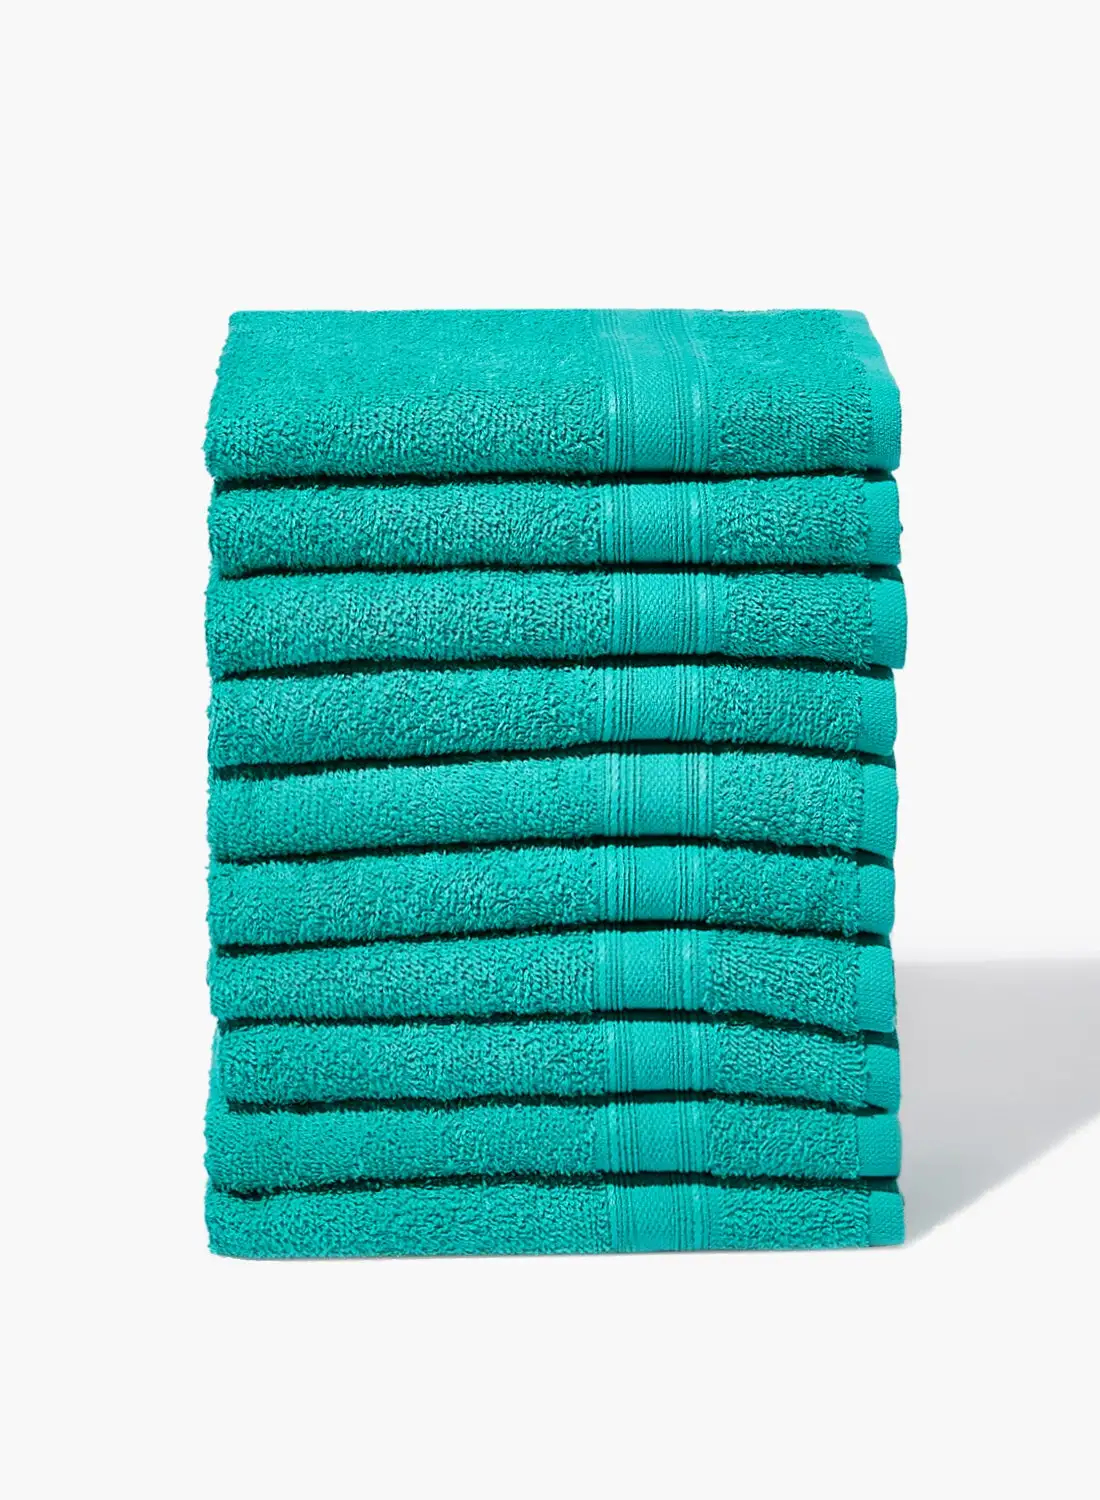 Amal 10 Piece Bathroom Towel Set - 400 GSM 100% Cotton Terry - 10 Face Towel - Emerald Color -Quick Dry - Super Absorbent